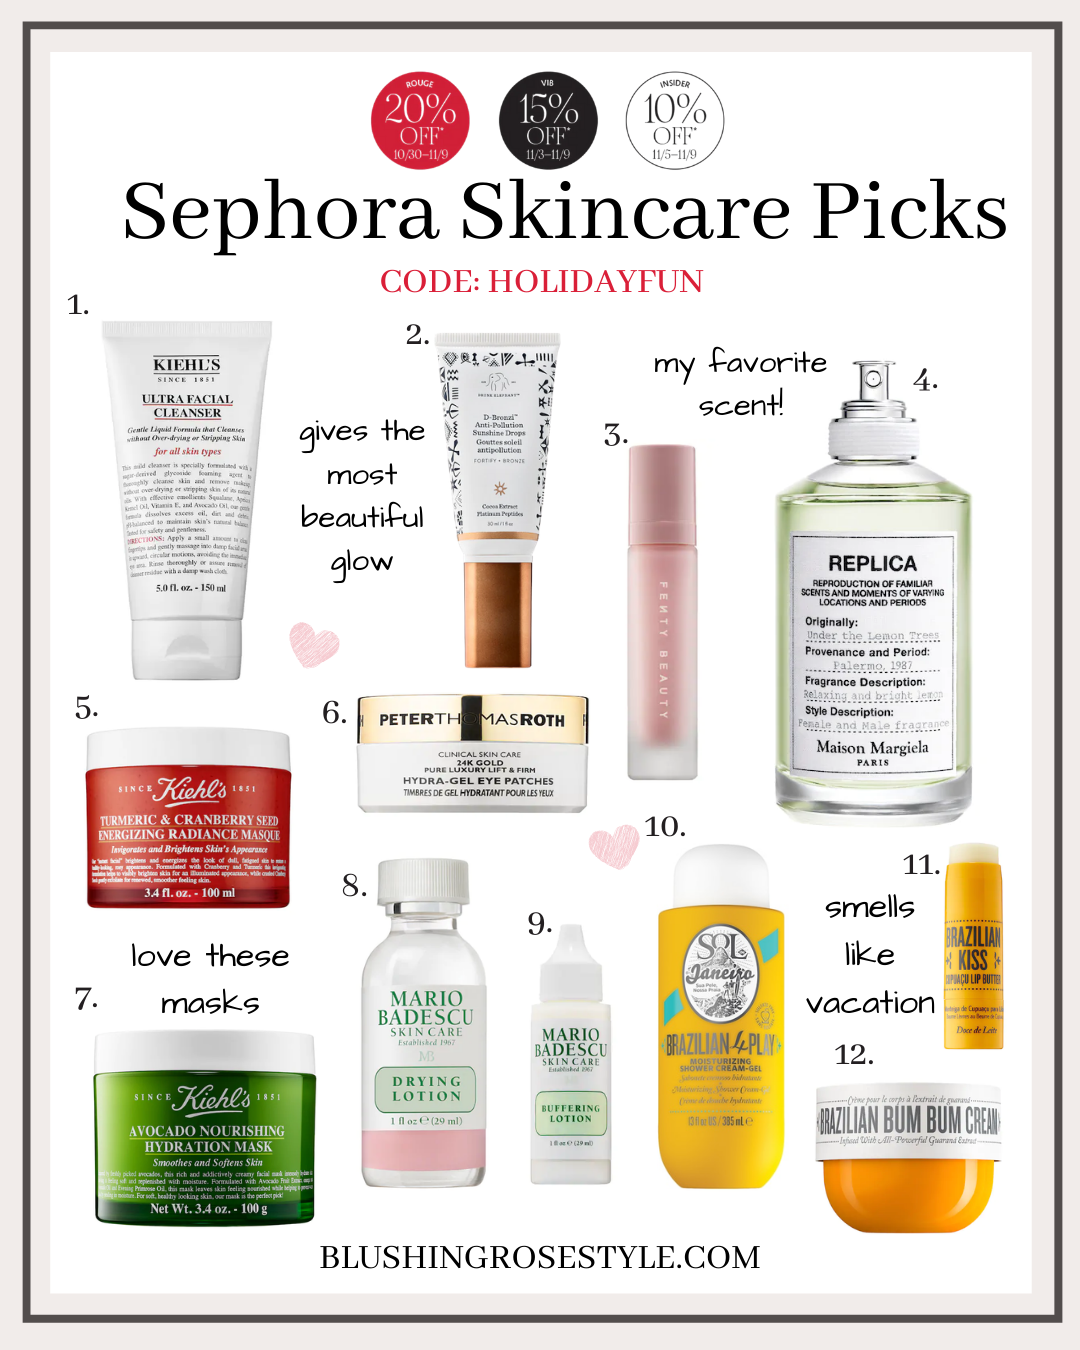 Sephora Skincare Picks